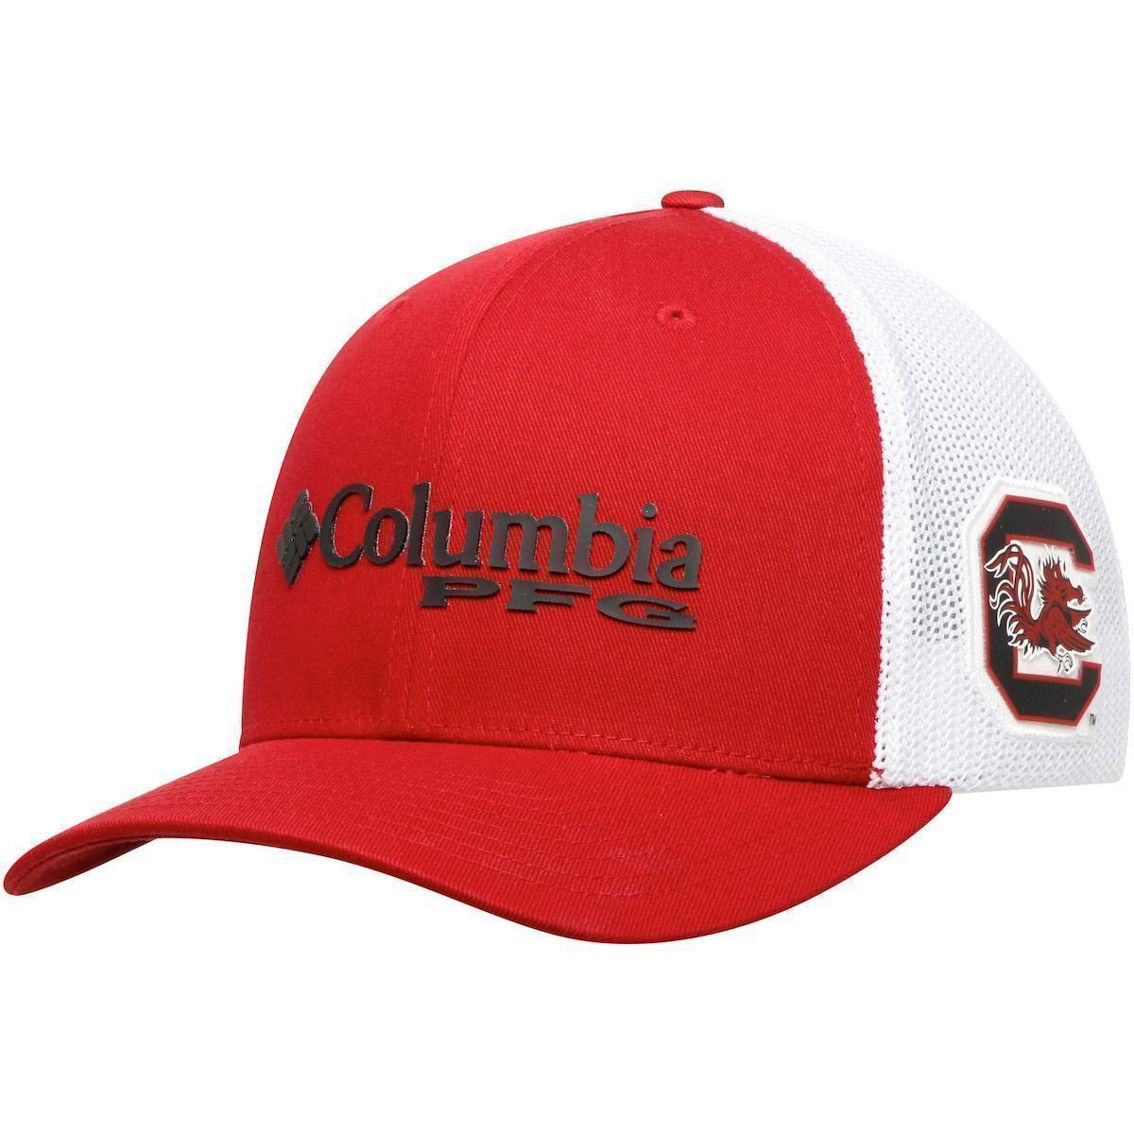 Men's Columbia Garnet South Carolina Gamecocks Collegiate PFG Flex Hat - Image 1 of 4